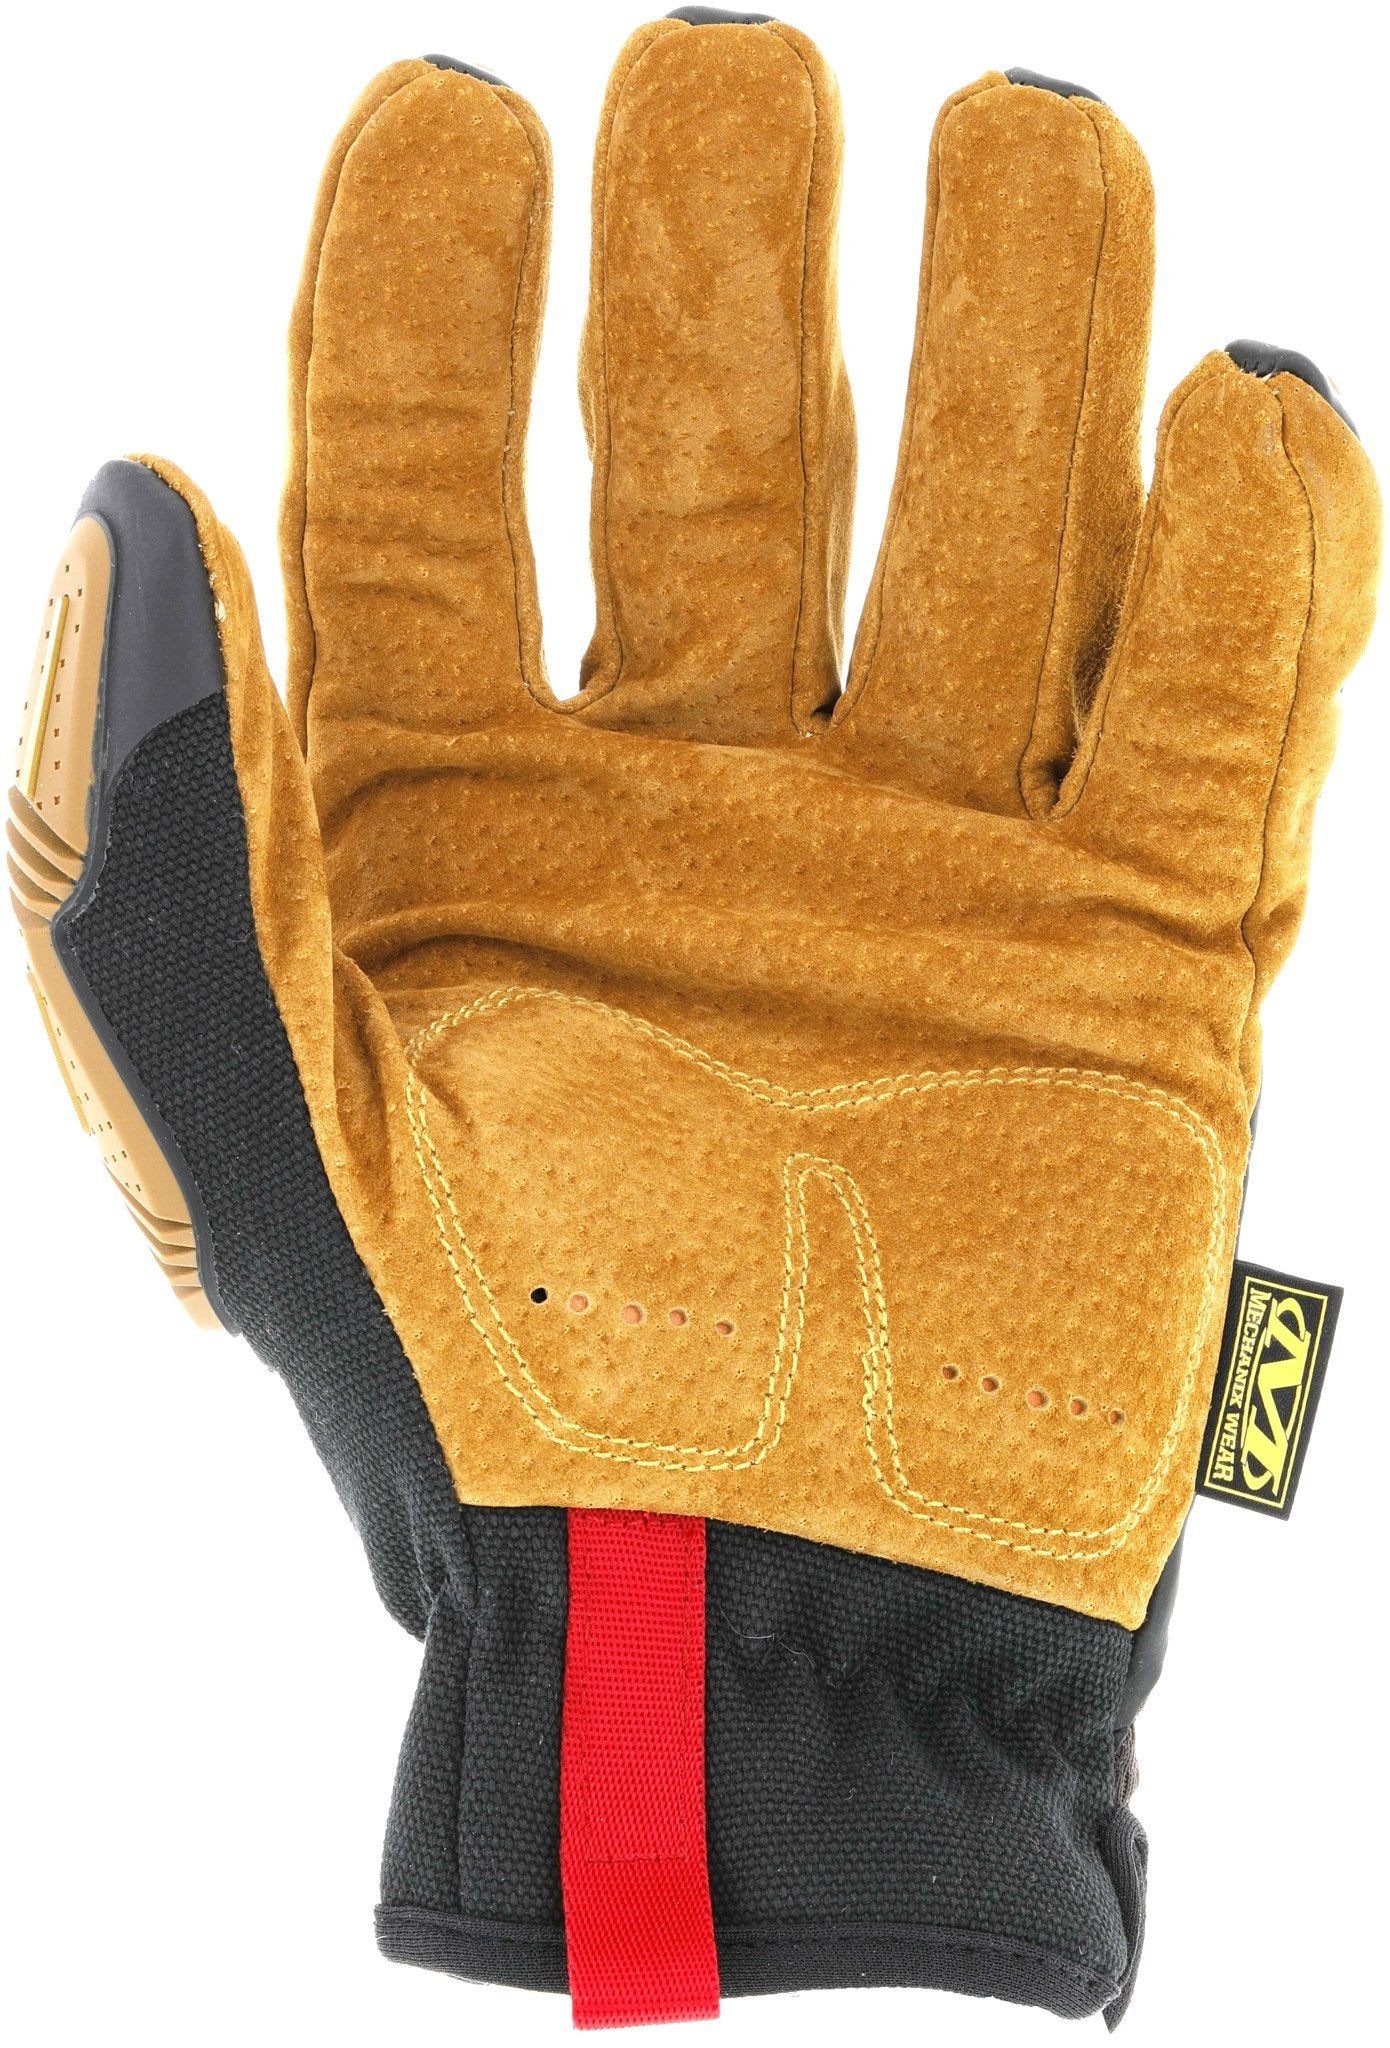 Mechanix Wear Durahide M-Pact Open Cuff Leather Glove Gloves Mechanix Wear Small Tactical Gear Supplier Tactical Distributors Australia